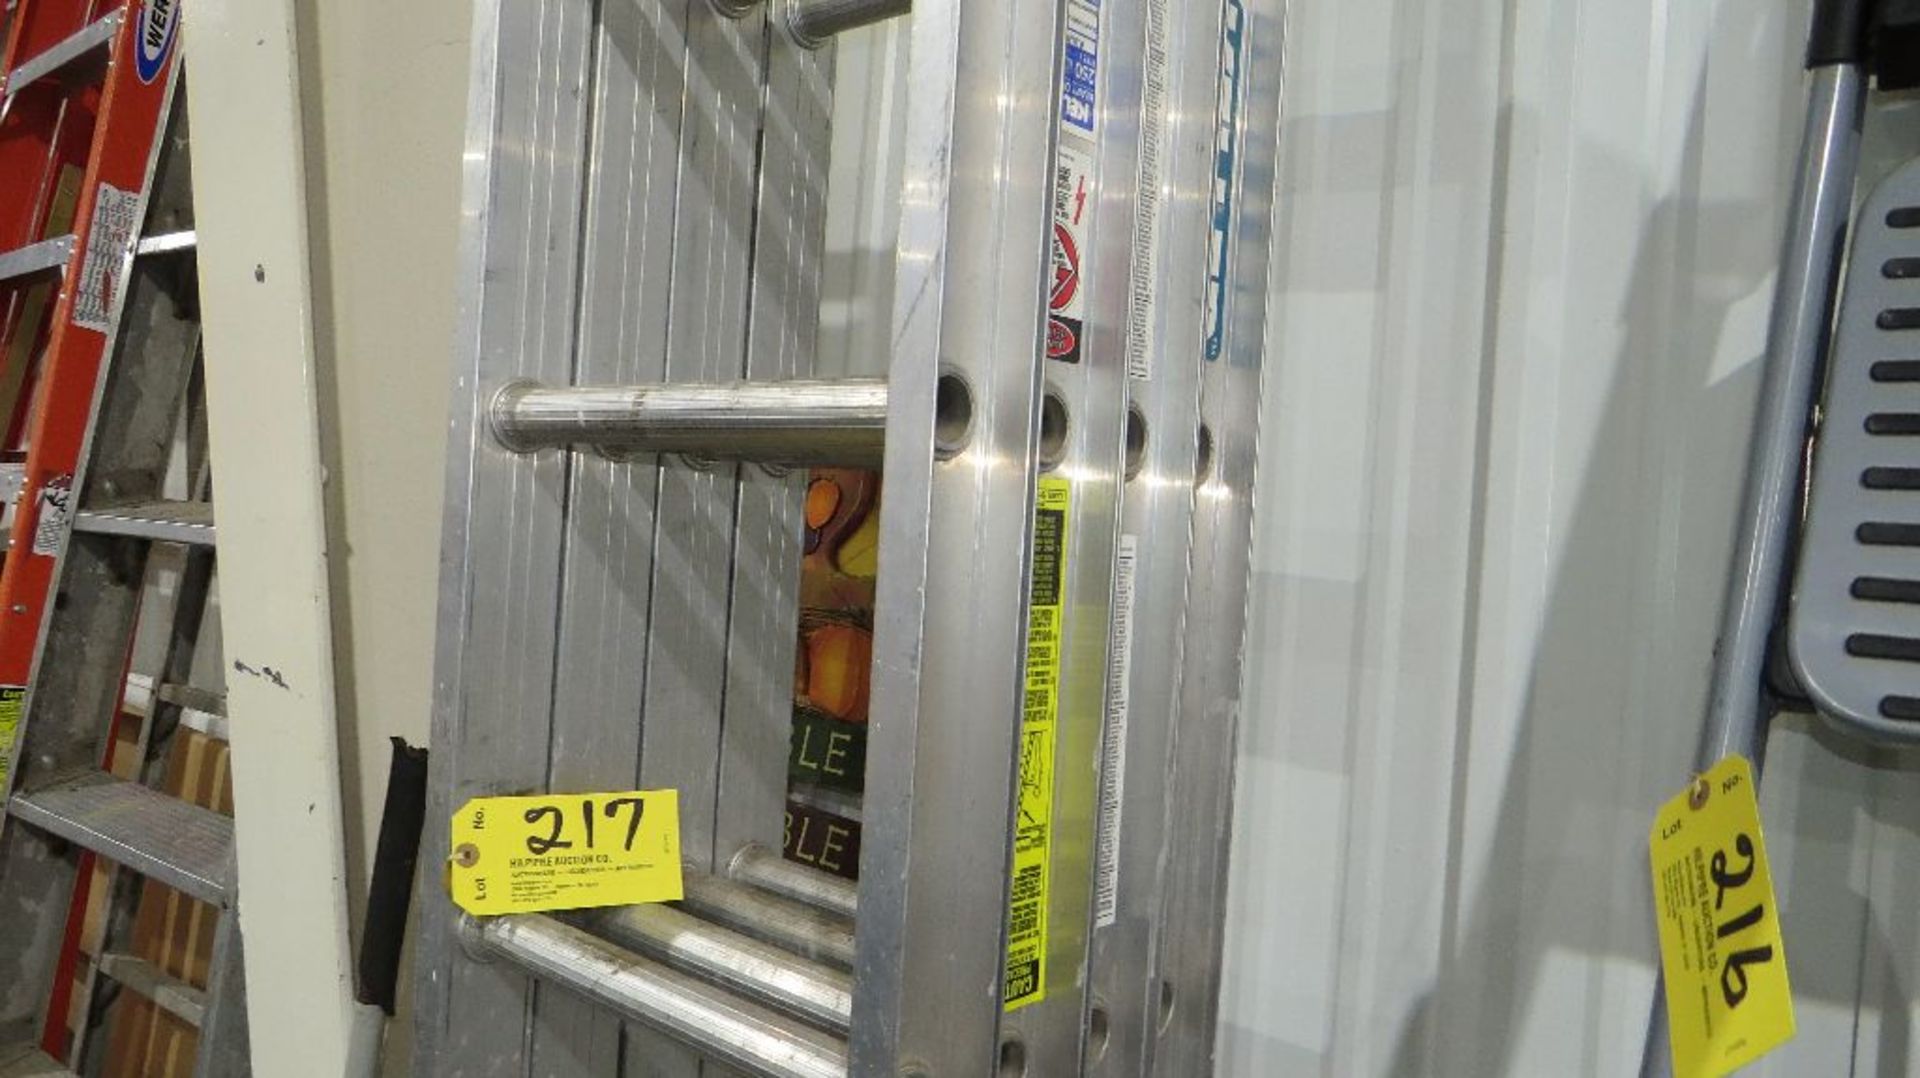 Keller aluminum 16' folding ladder.